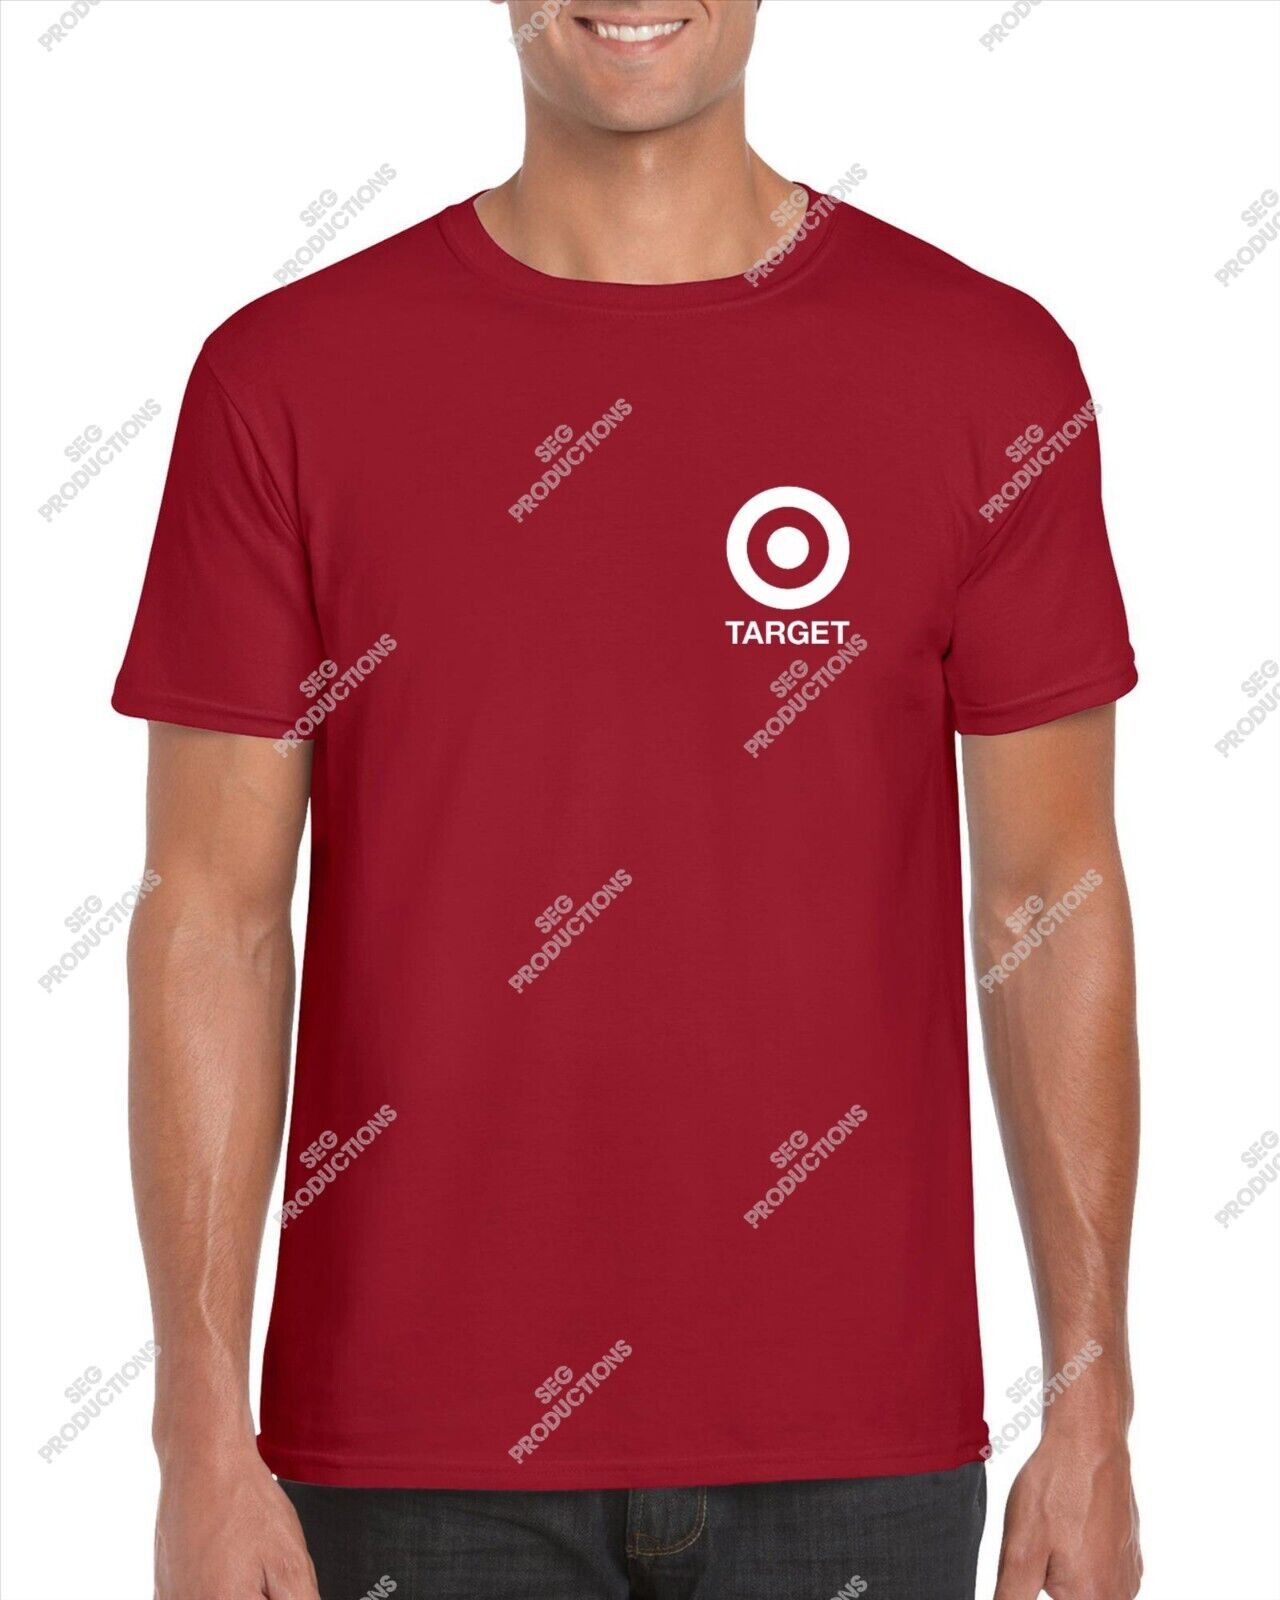 Target Store Employee Tshirt Red Or BLACK MEDIUM 